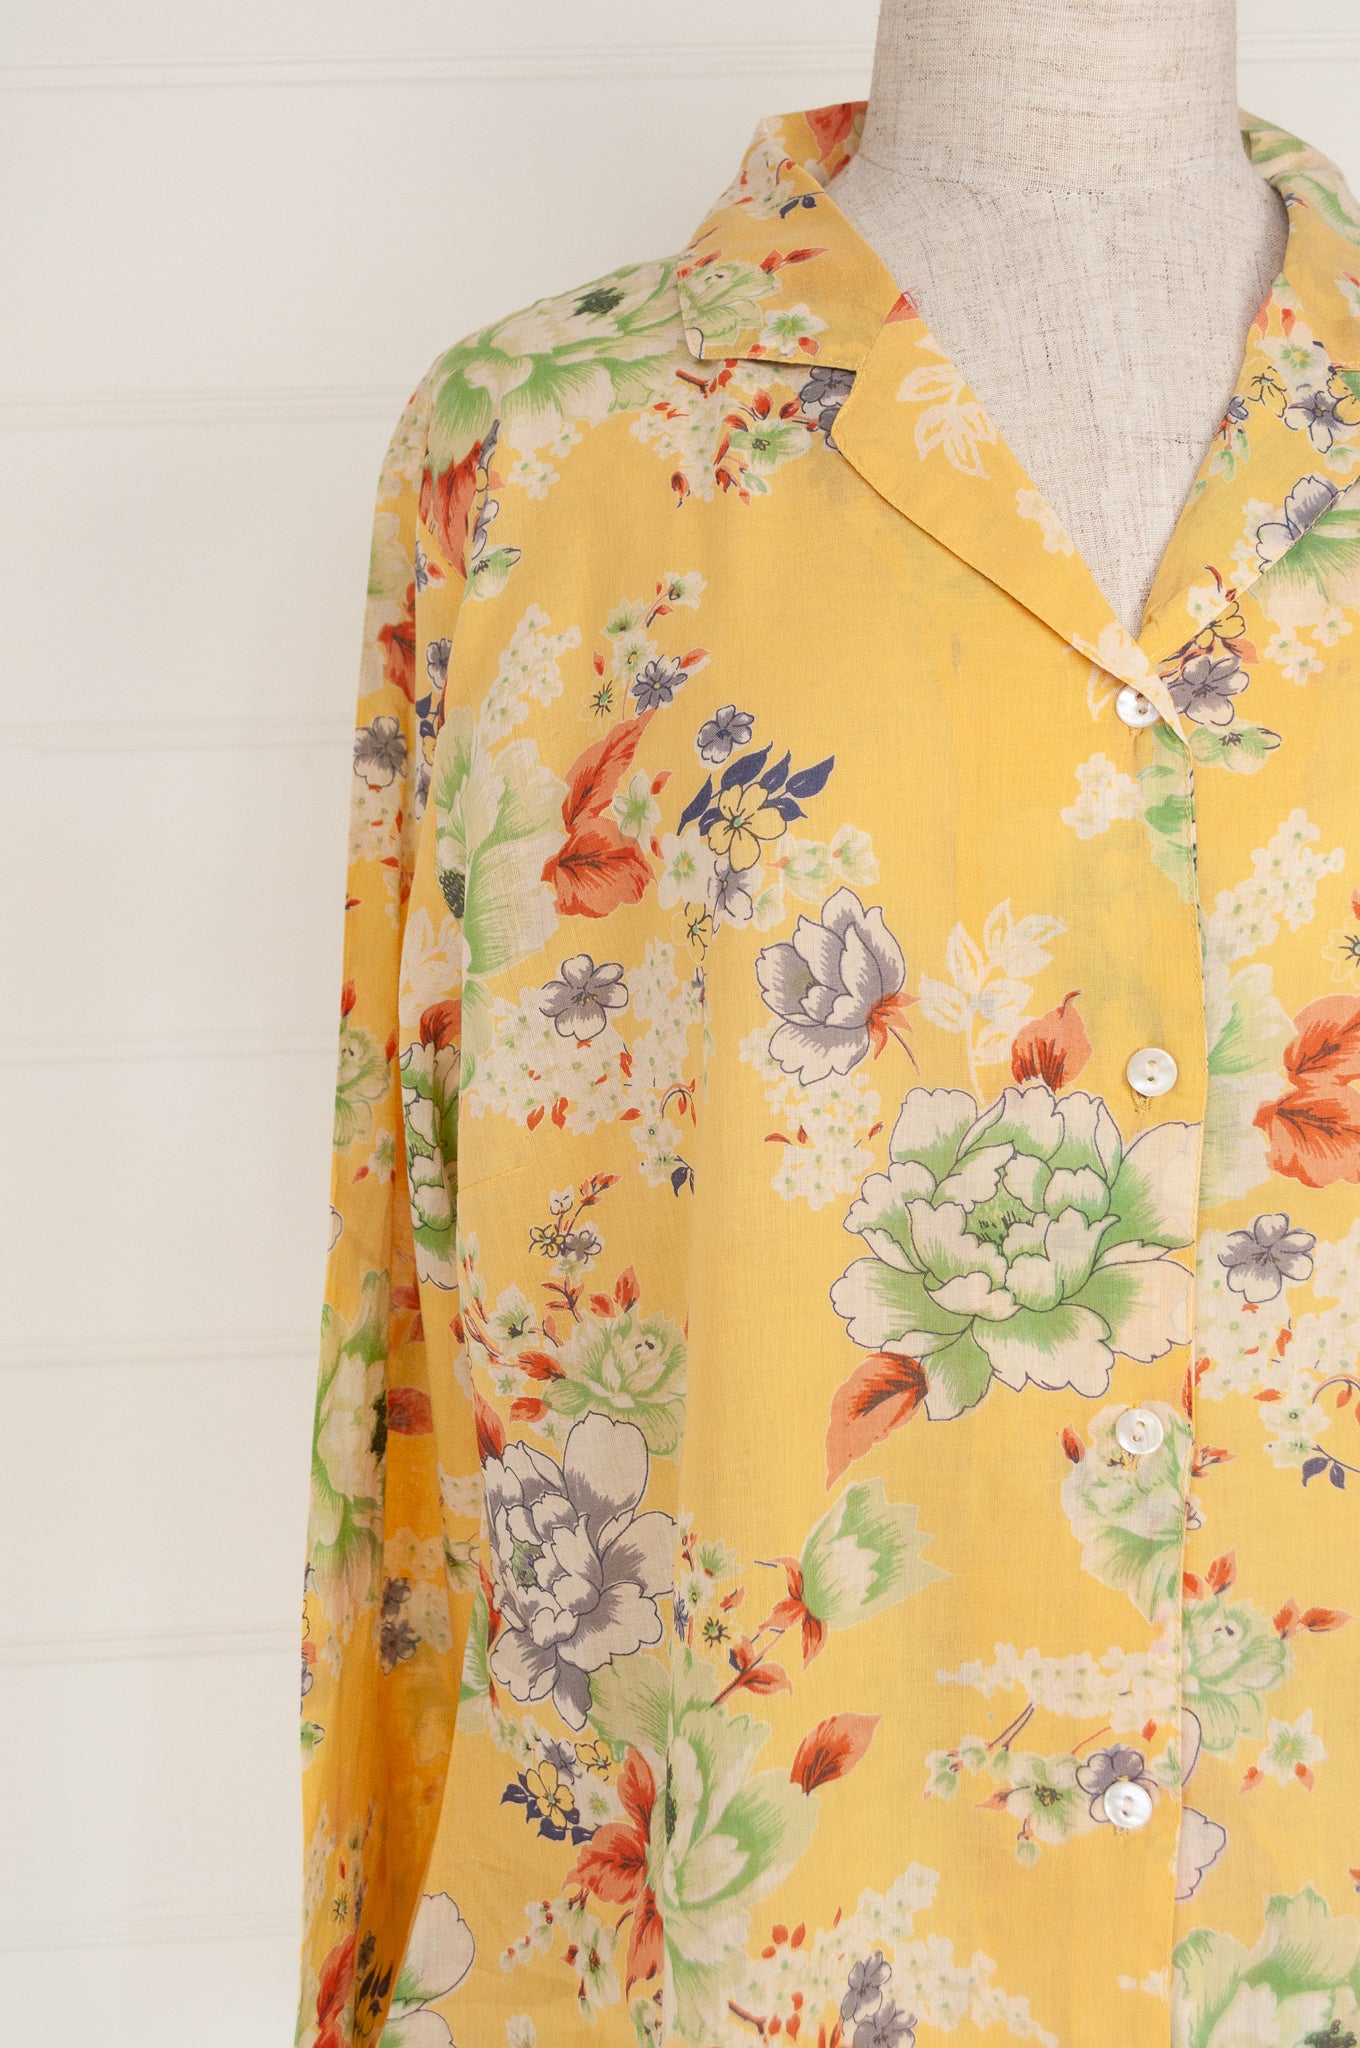 Juniper Hearth cotton voile pyjamas im butter yellow Summer Peony floral print. 